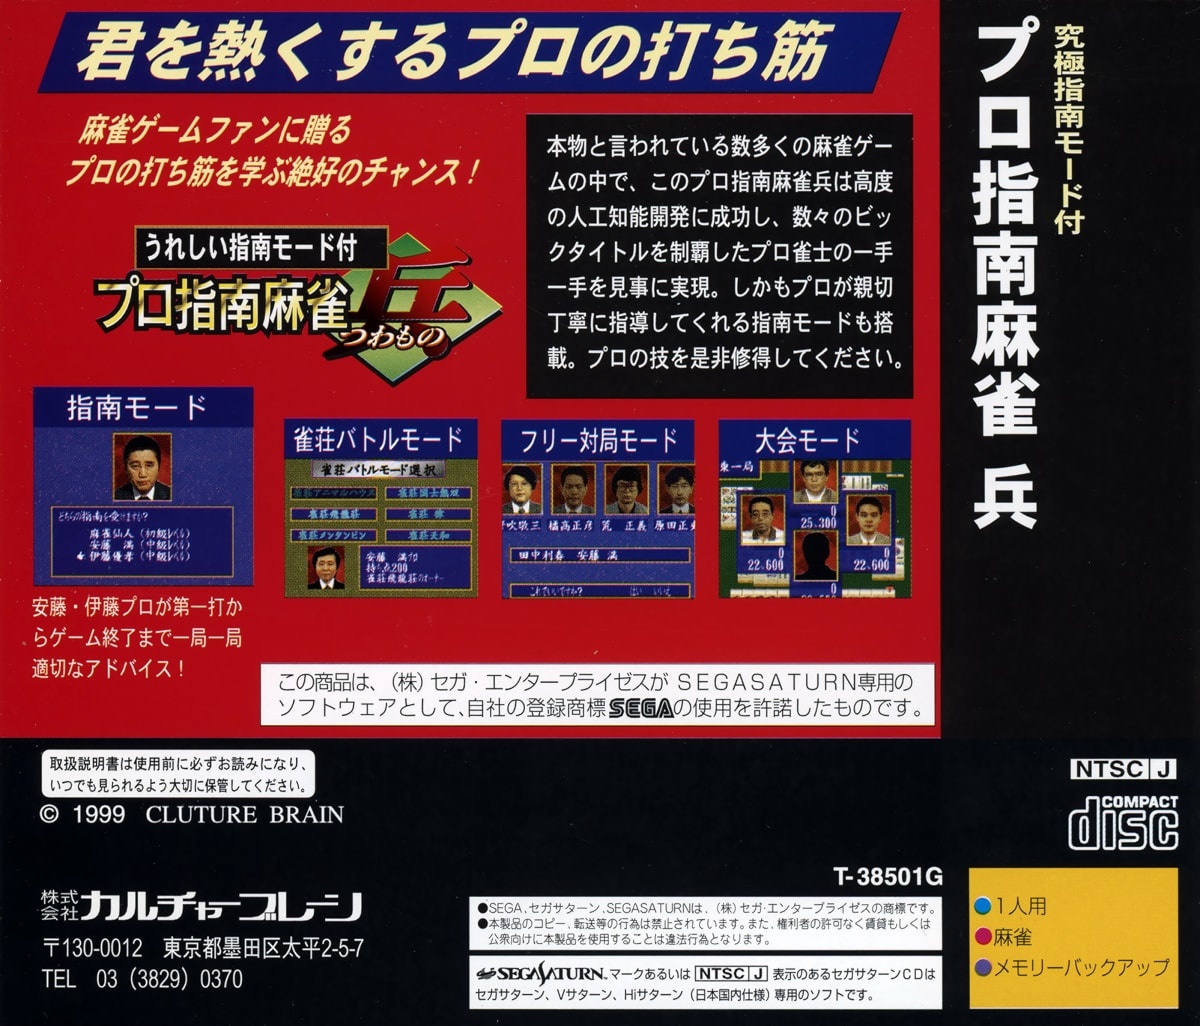 Capa do jogo Pro Shinan Mahjong "Tsuwamono"